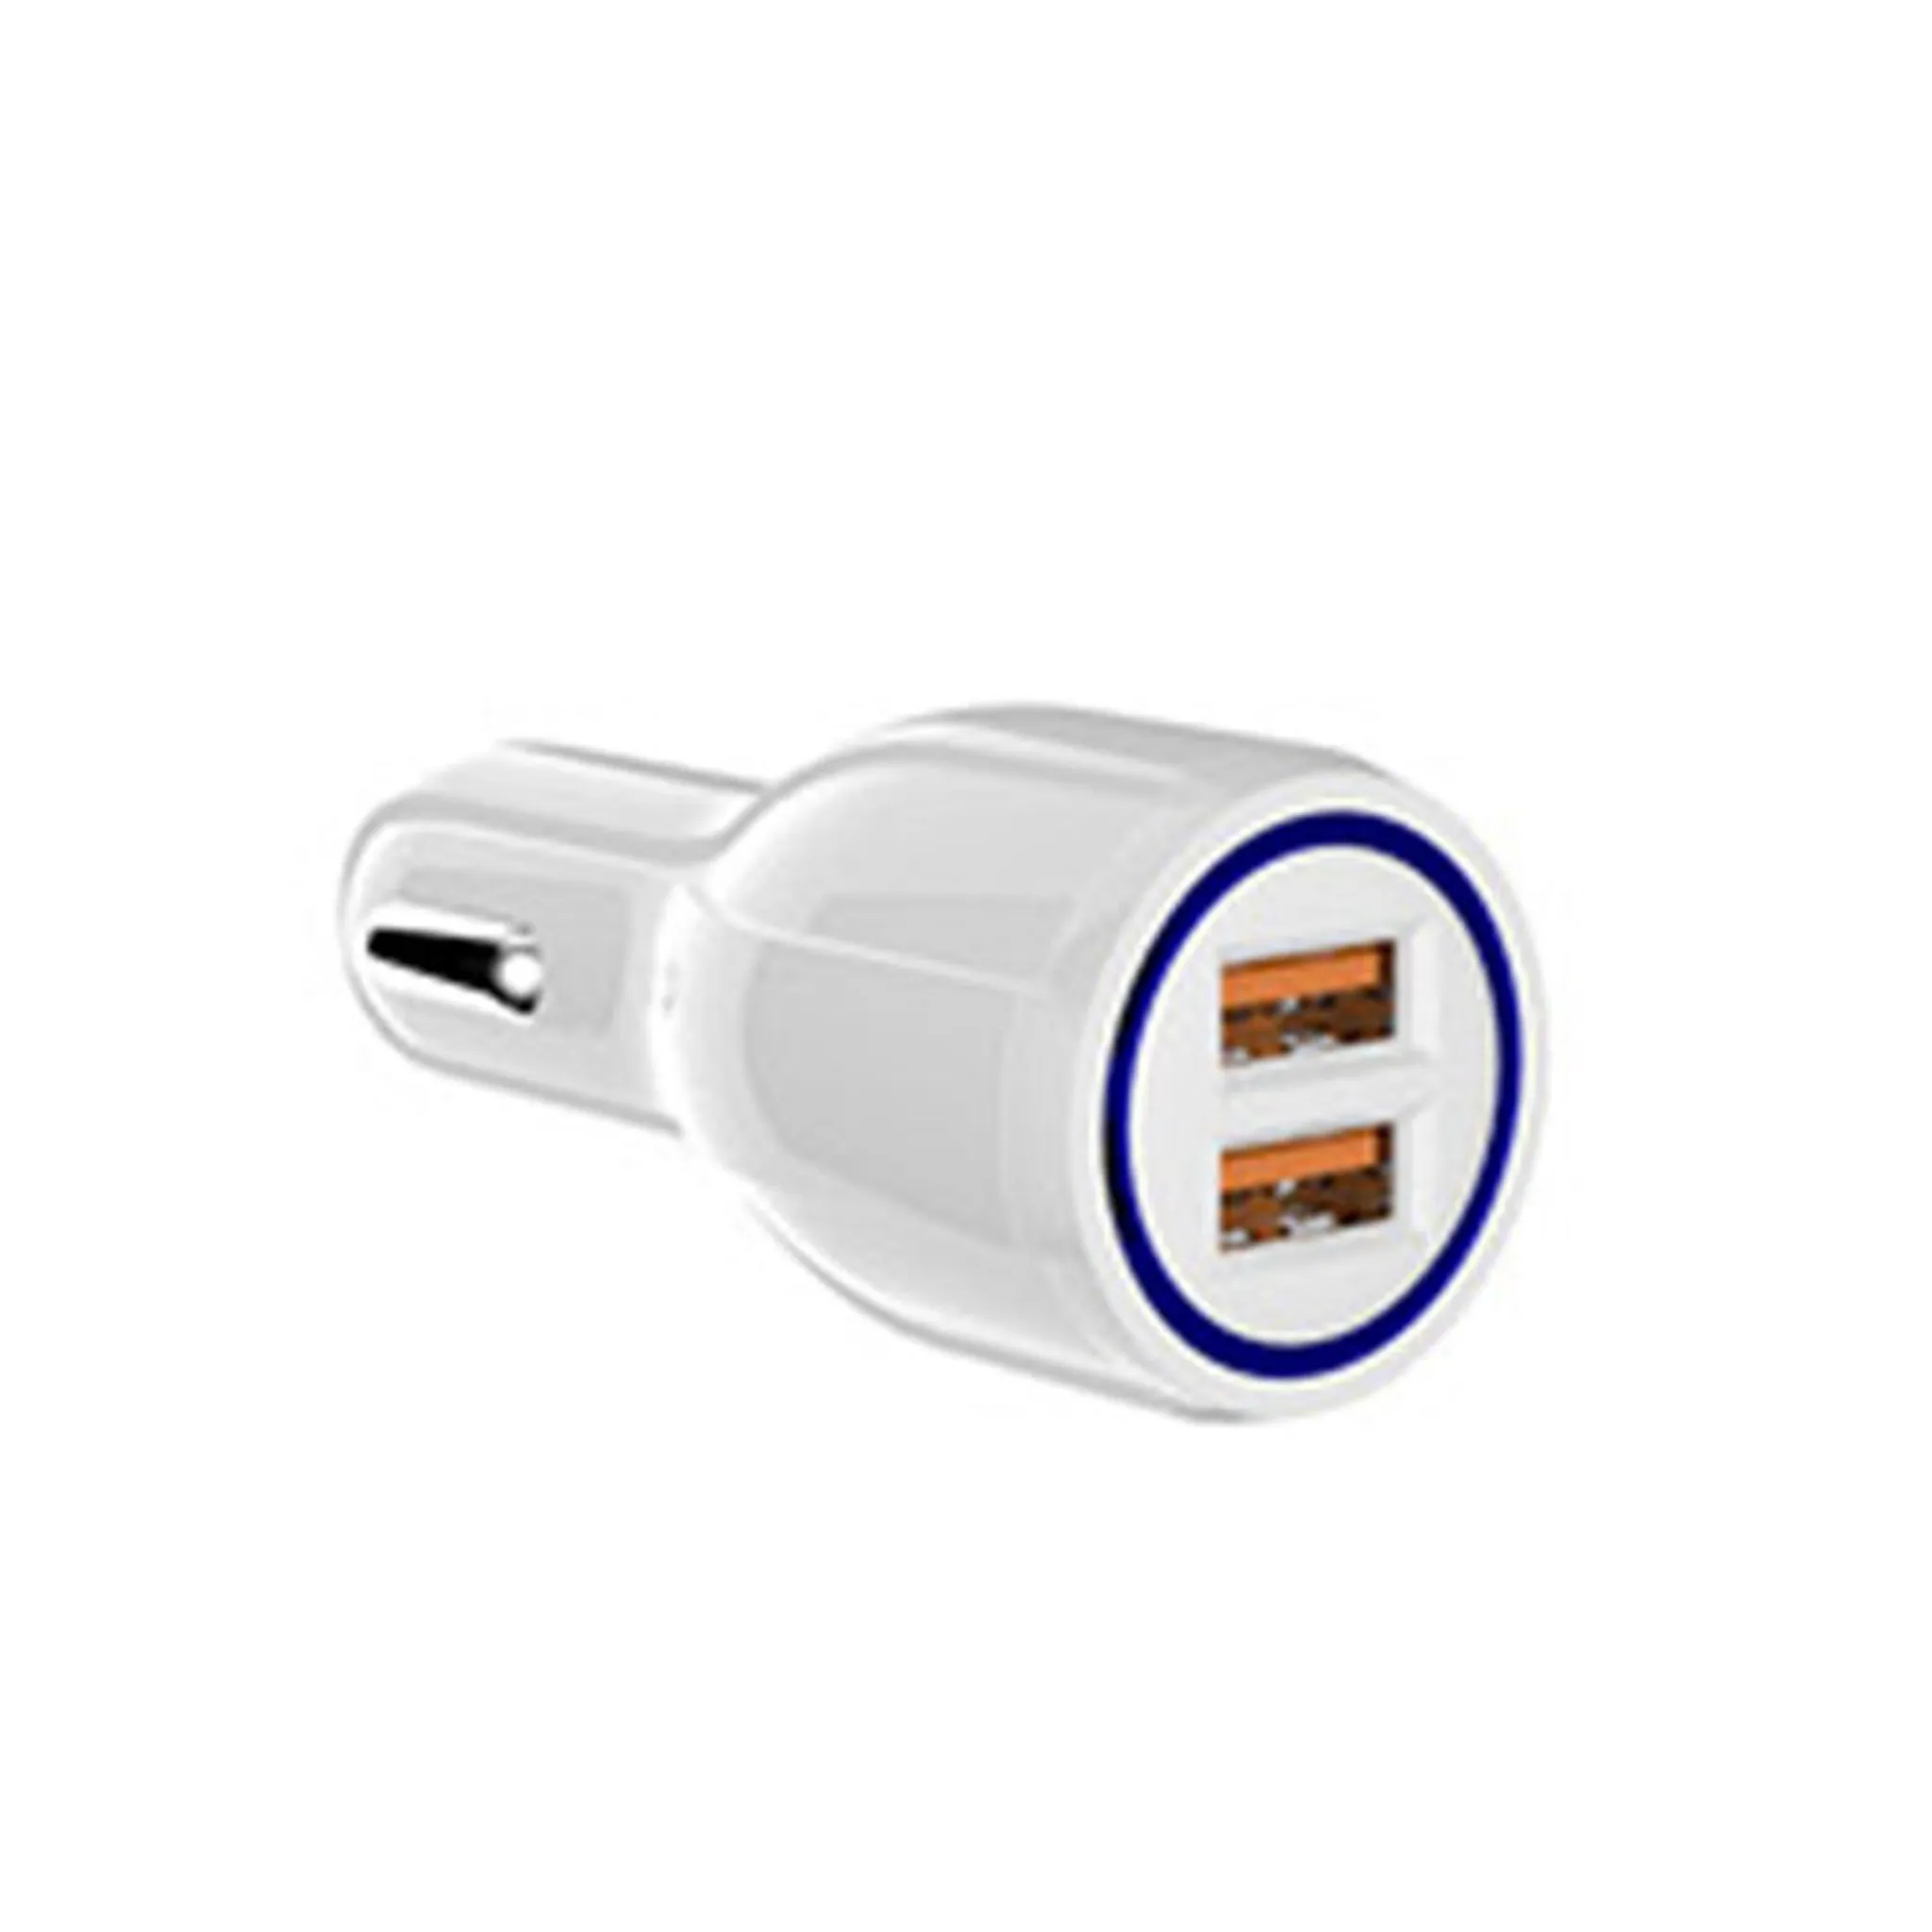 Kfz Adapter USB Stecker für Ladekabel Zigarettenanzünder Auto Handy  Ladegerät